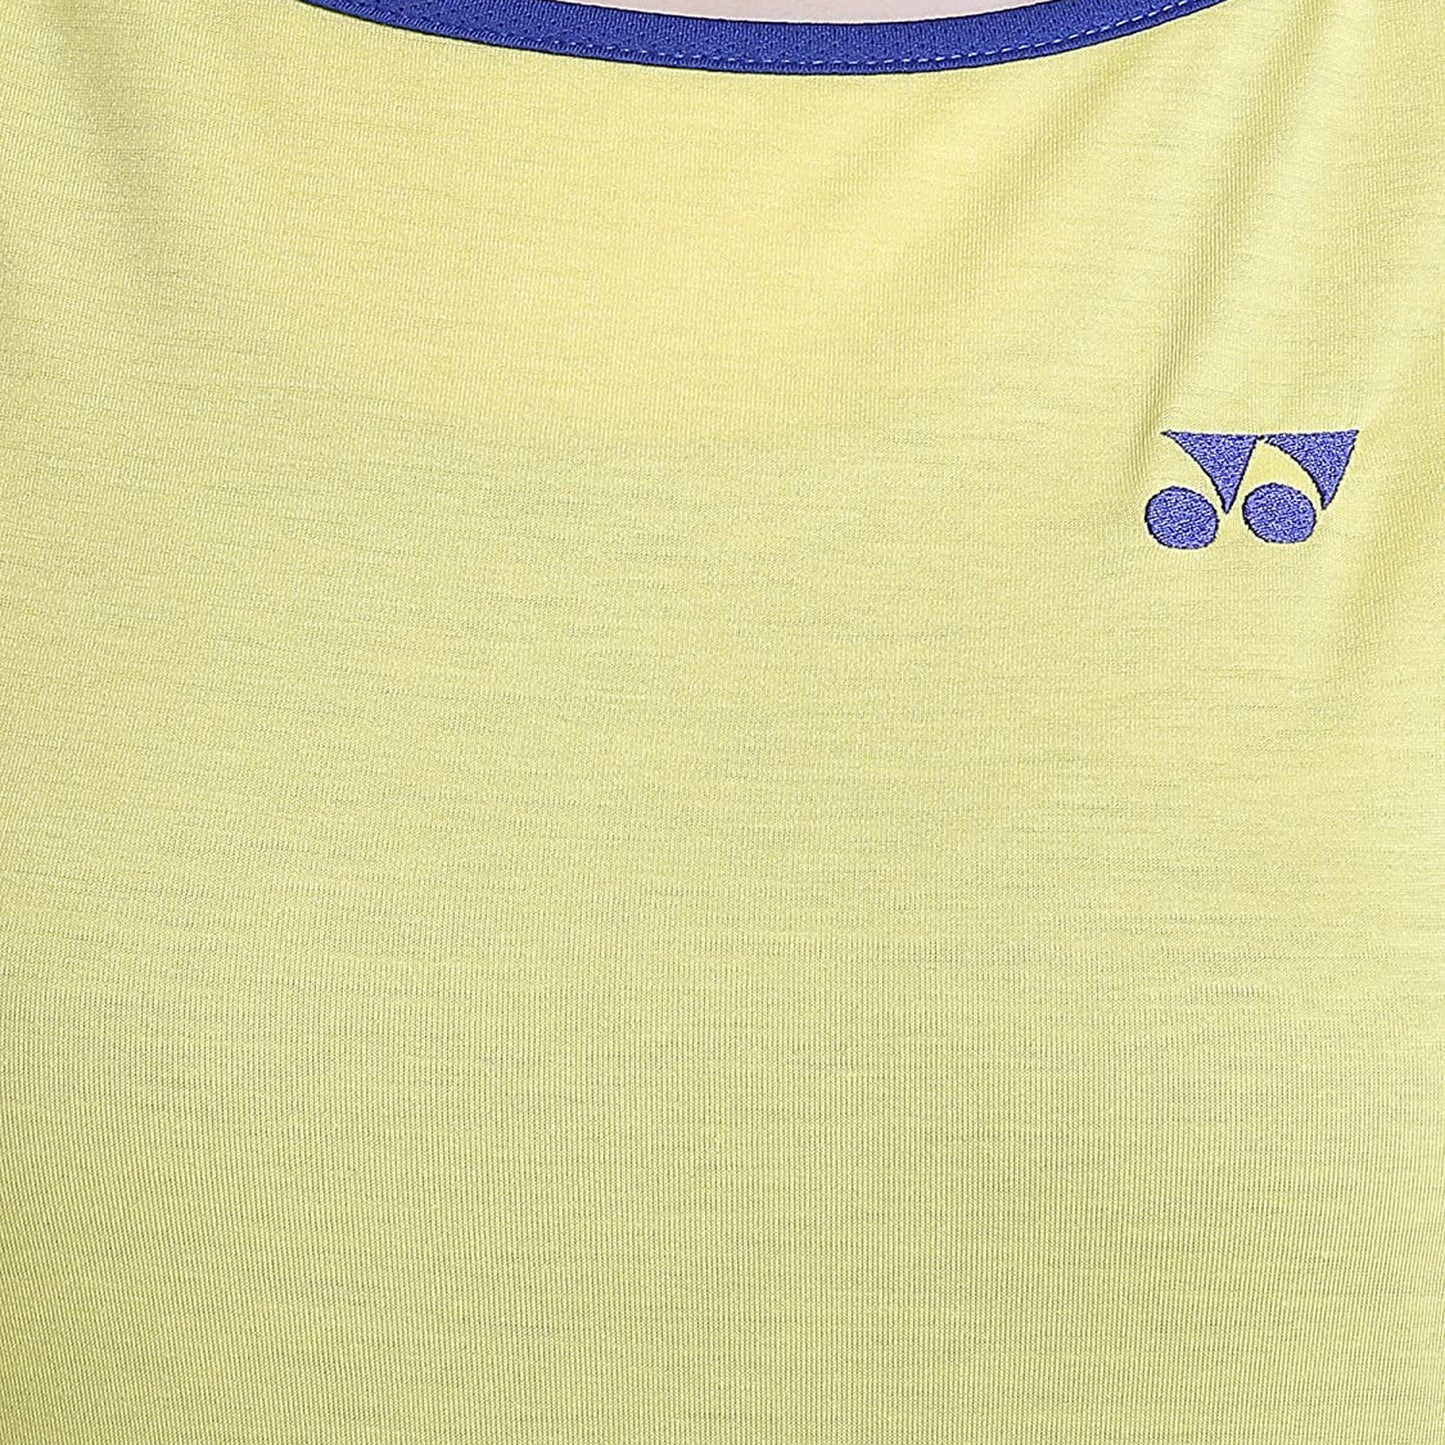 Yonex 20288 Round Neck T Shirt for Women, Yellow - Best Price online Prokicksports.com